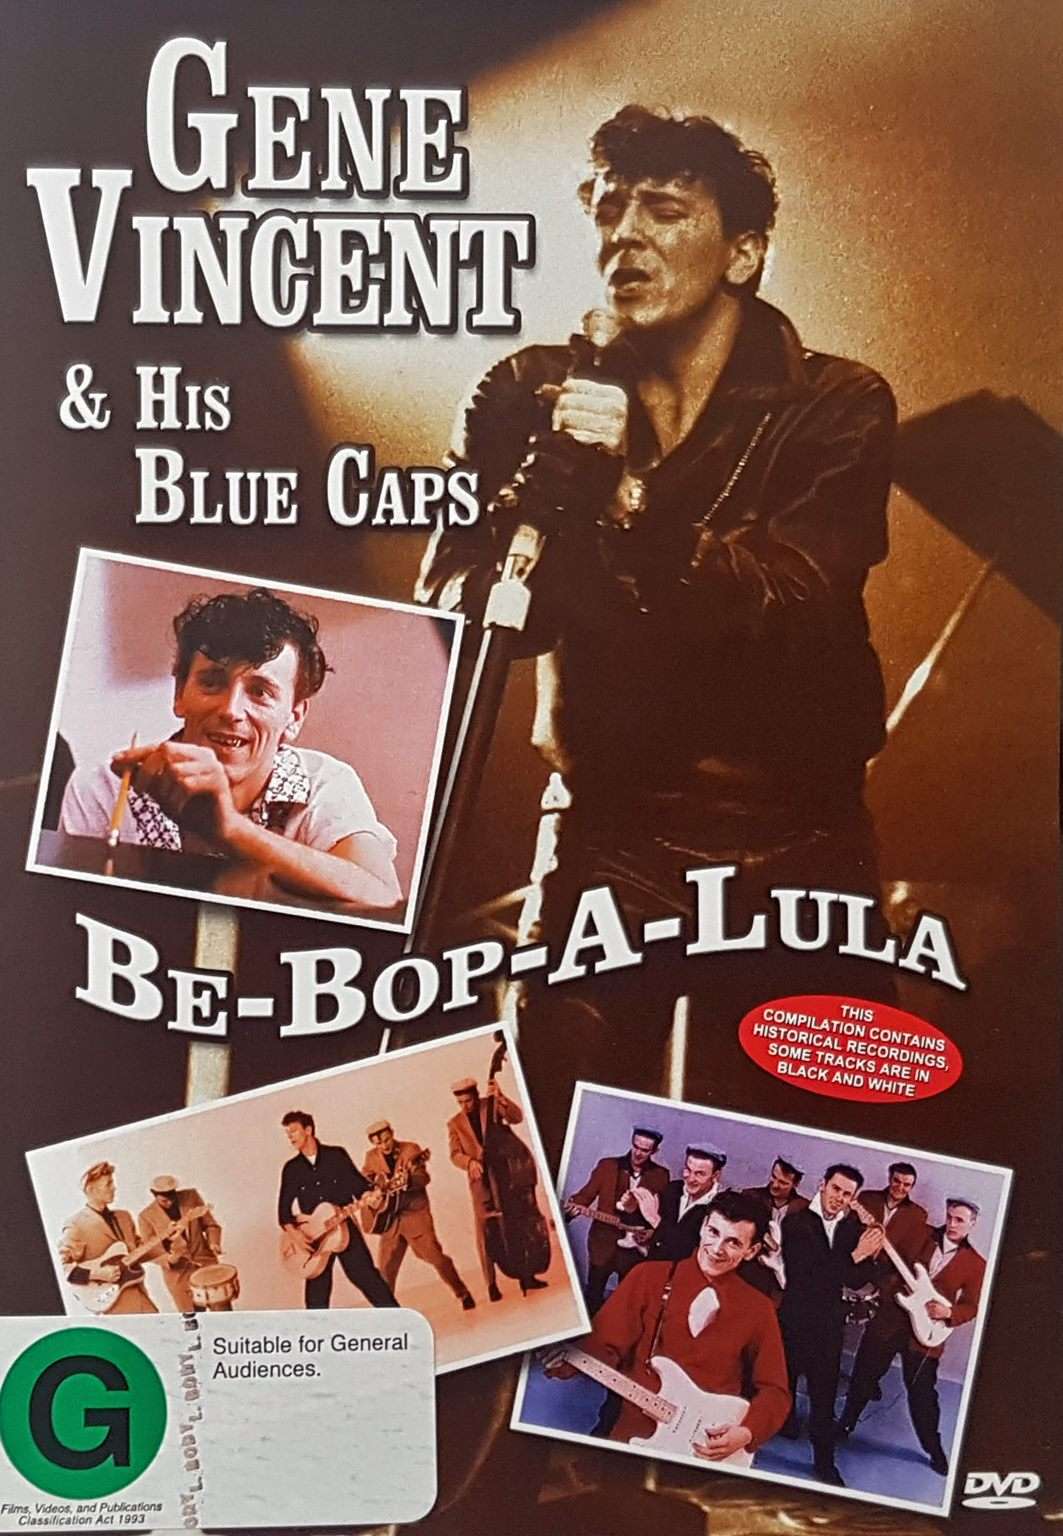 Gene Vincent & His Blue Caps - Be Bop a Lula